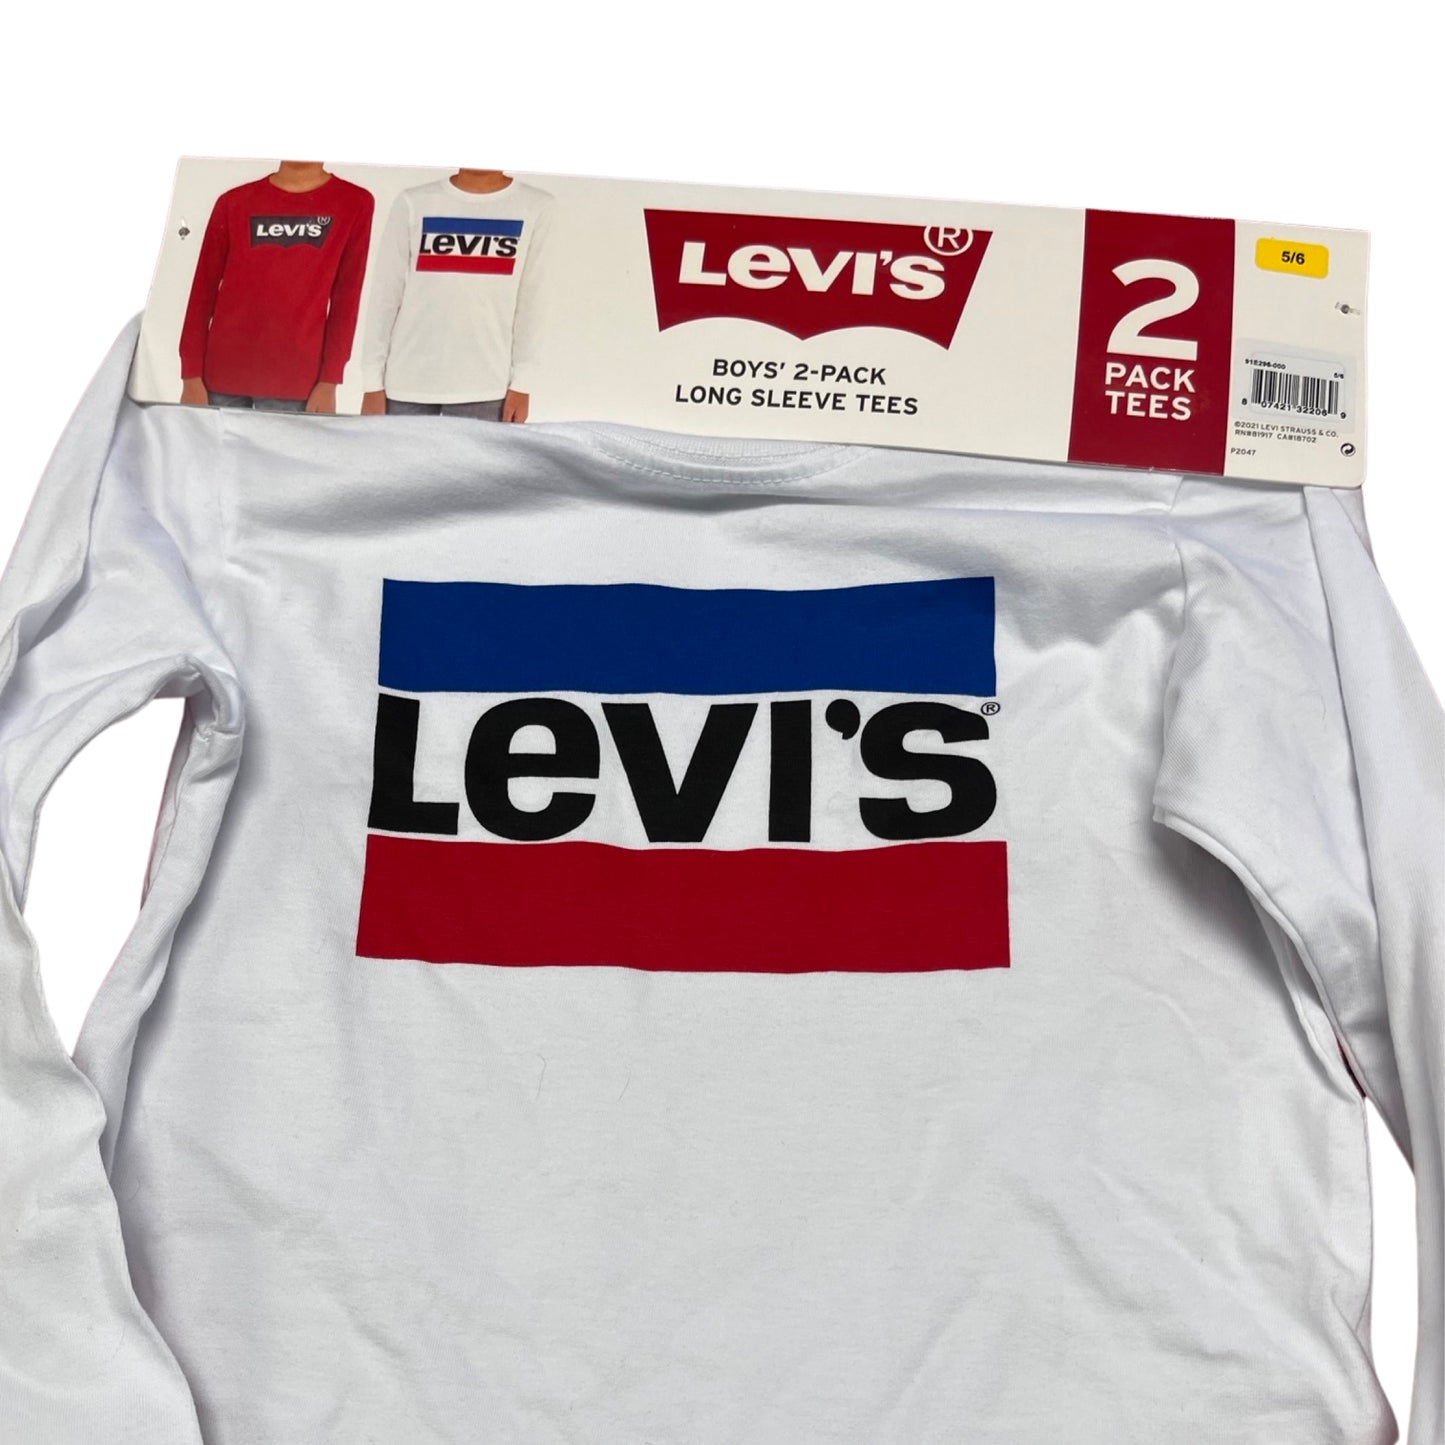 5-6 New Levi’s Tee Shirts